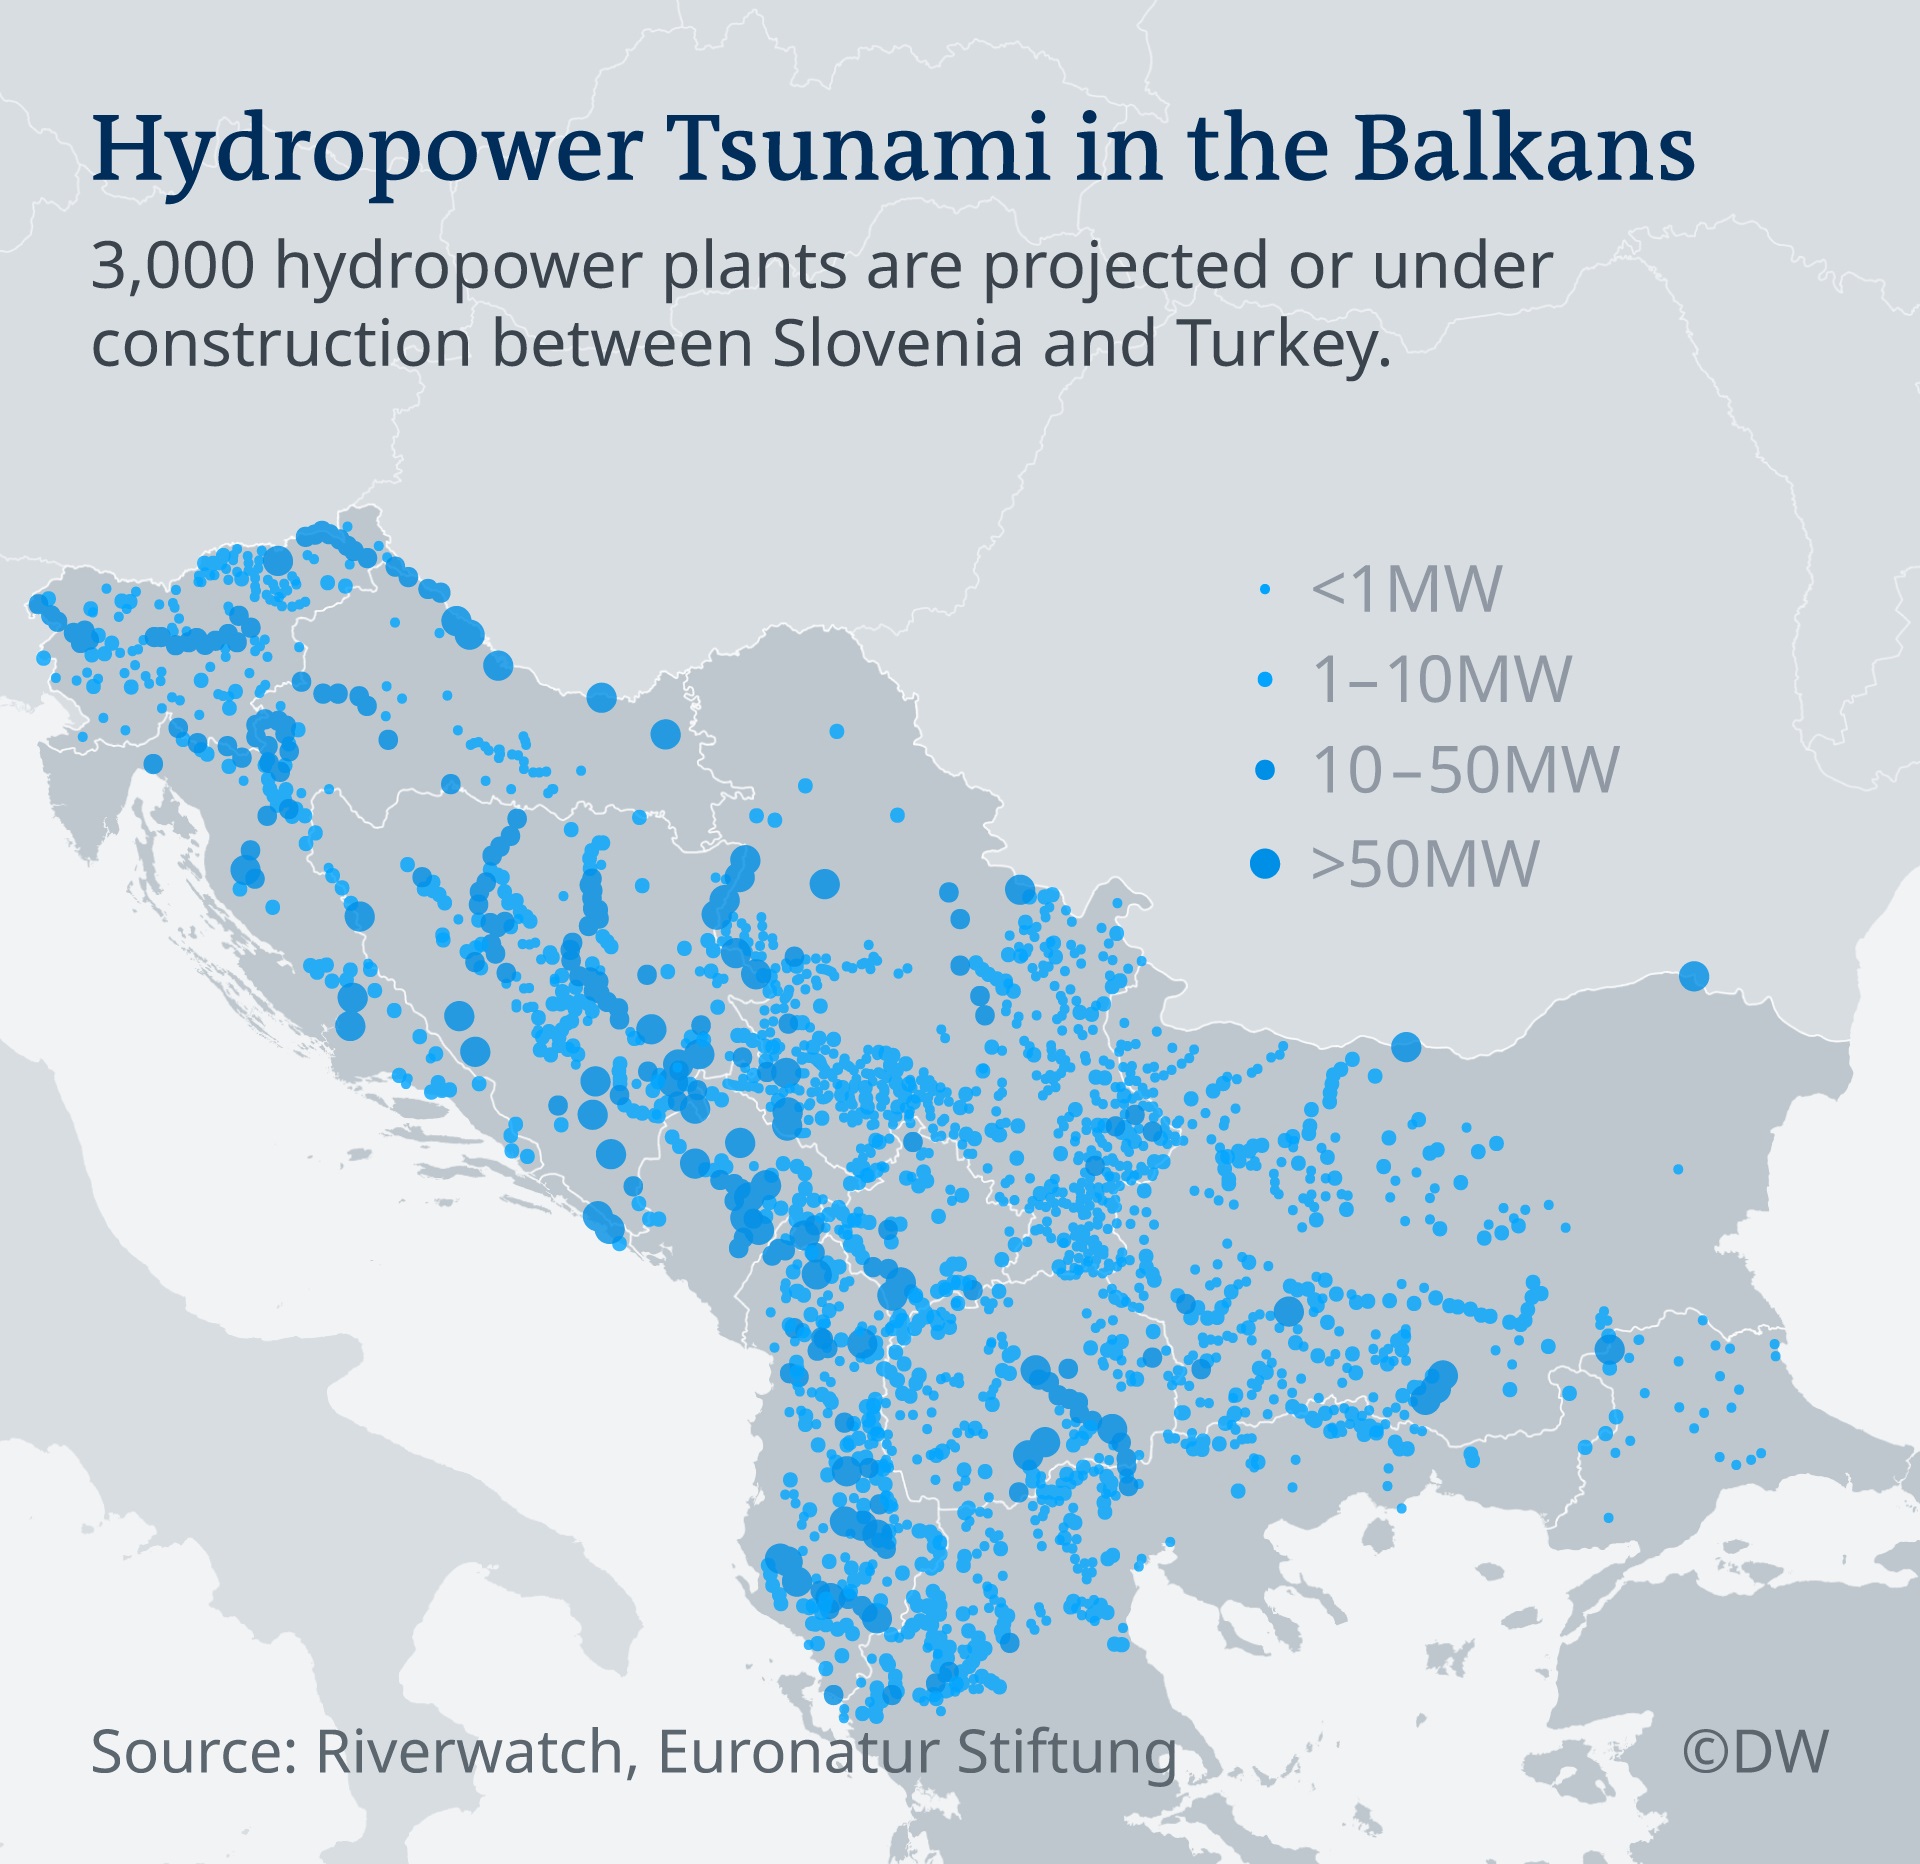 Hydropower tsunami in the Balkans